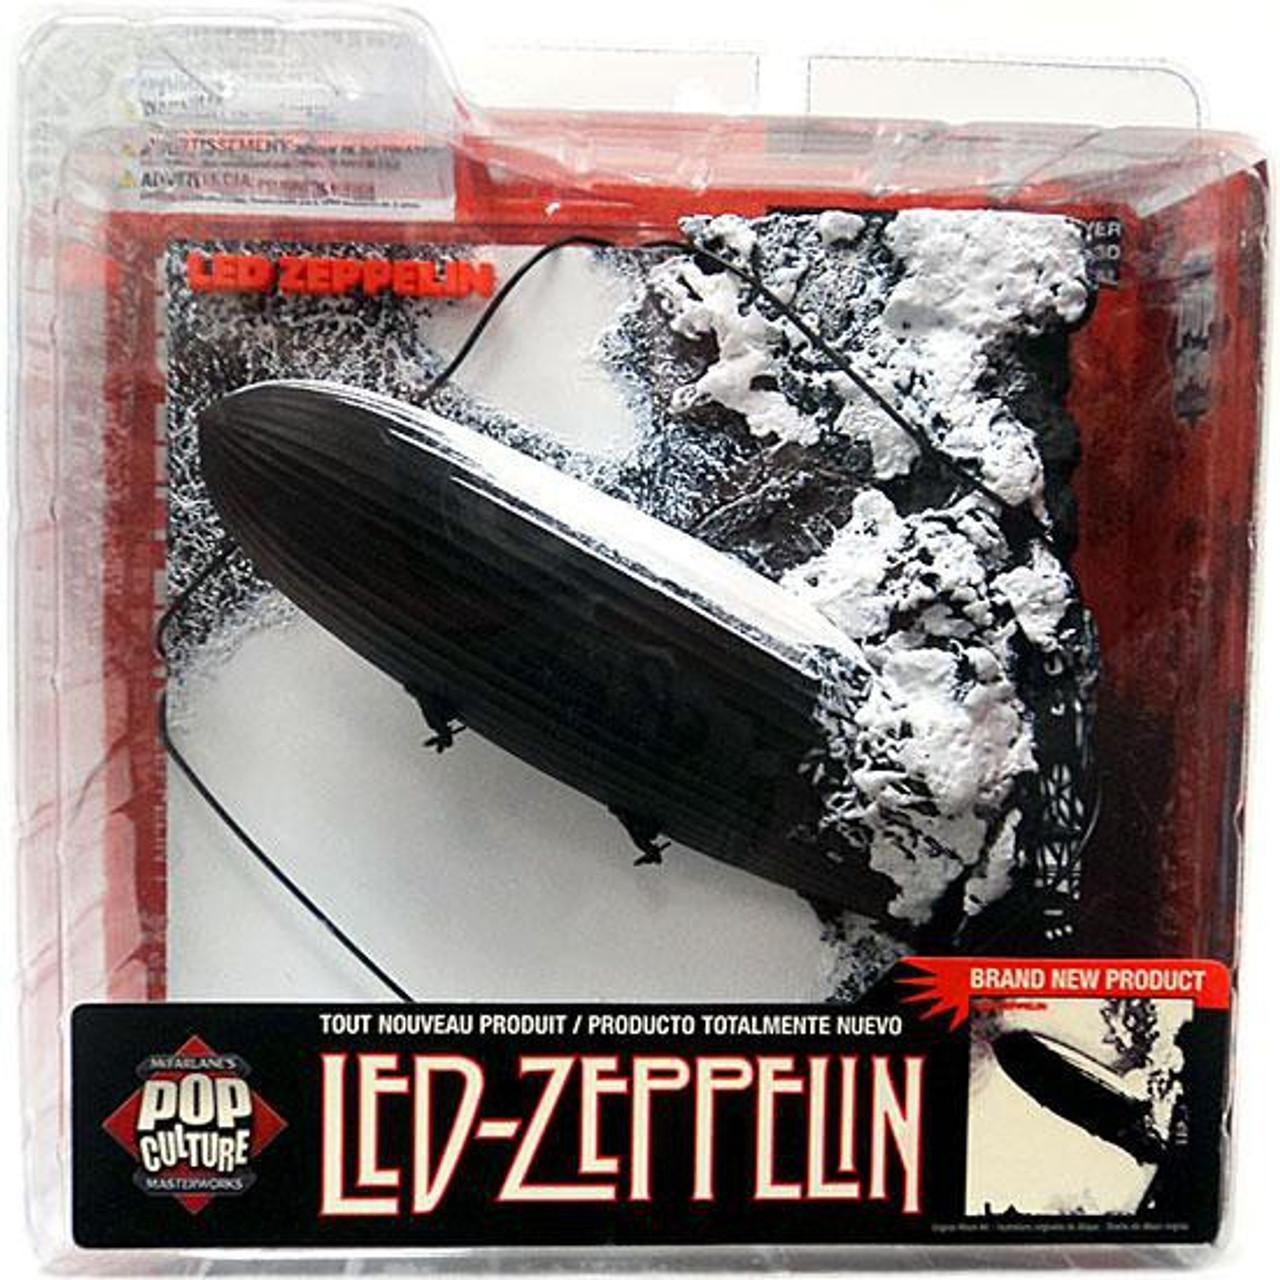 Mcfarlane Toys Pink Banner Pop Culture Masterworks Led Zeppelin 3 D Album Cover Damaged Package Toywiz - roblox blimp wars